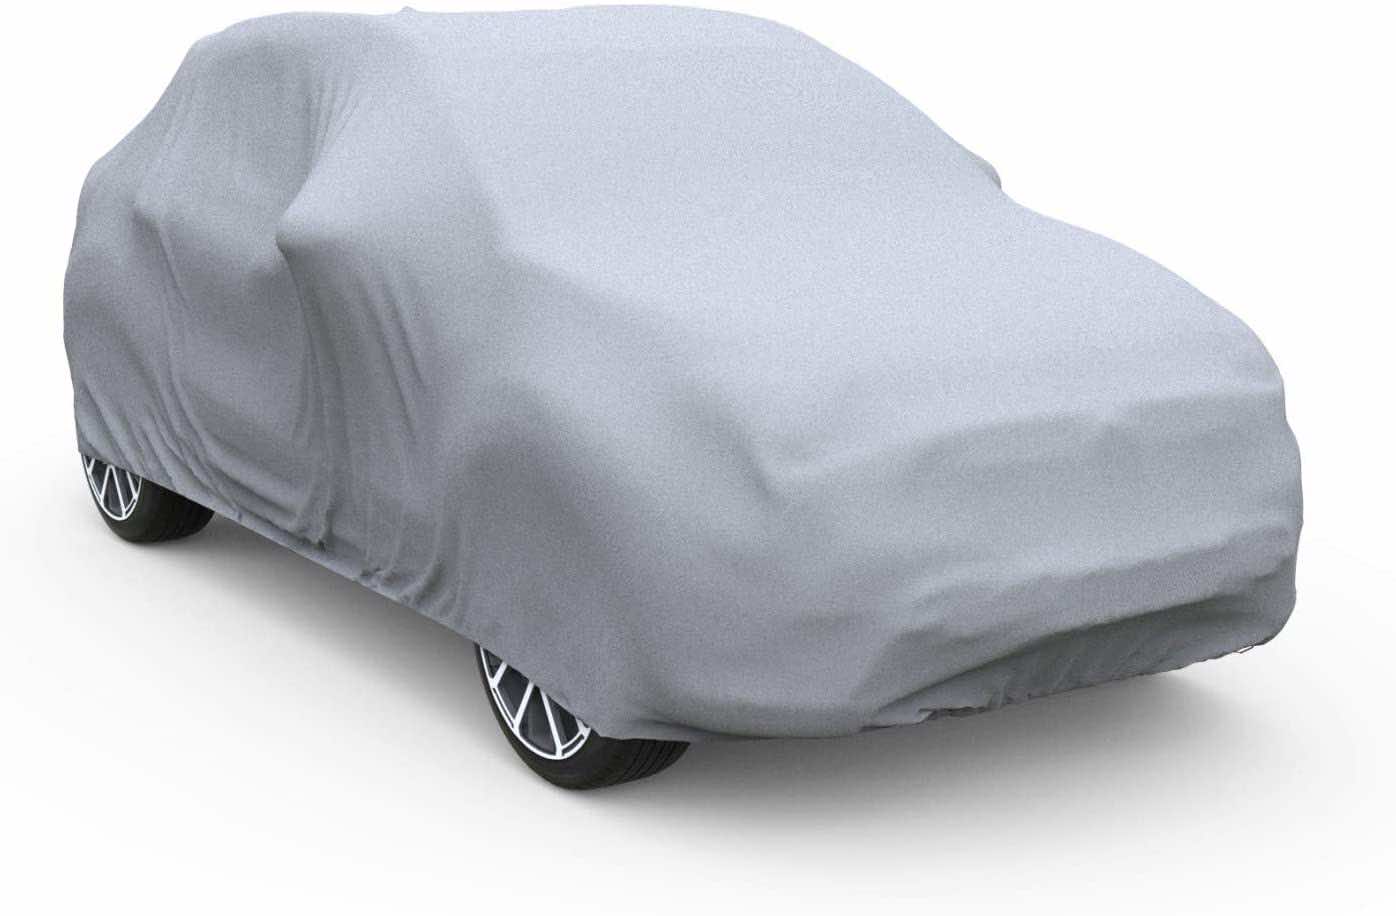 10 Best Car Covers For Hyundai Santa Fe - Wonderful Engineer